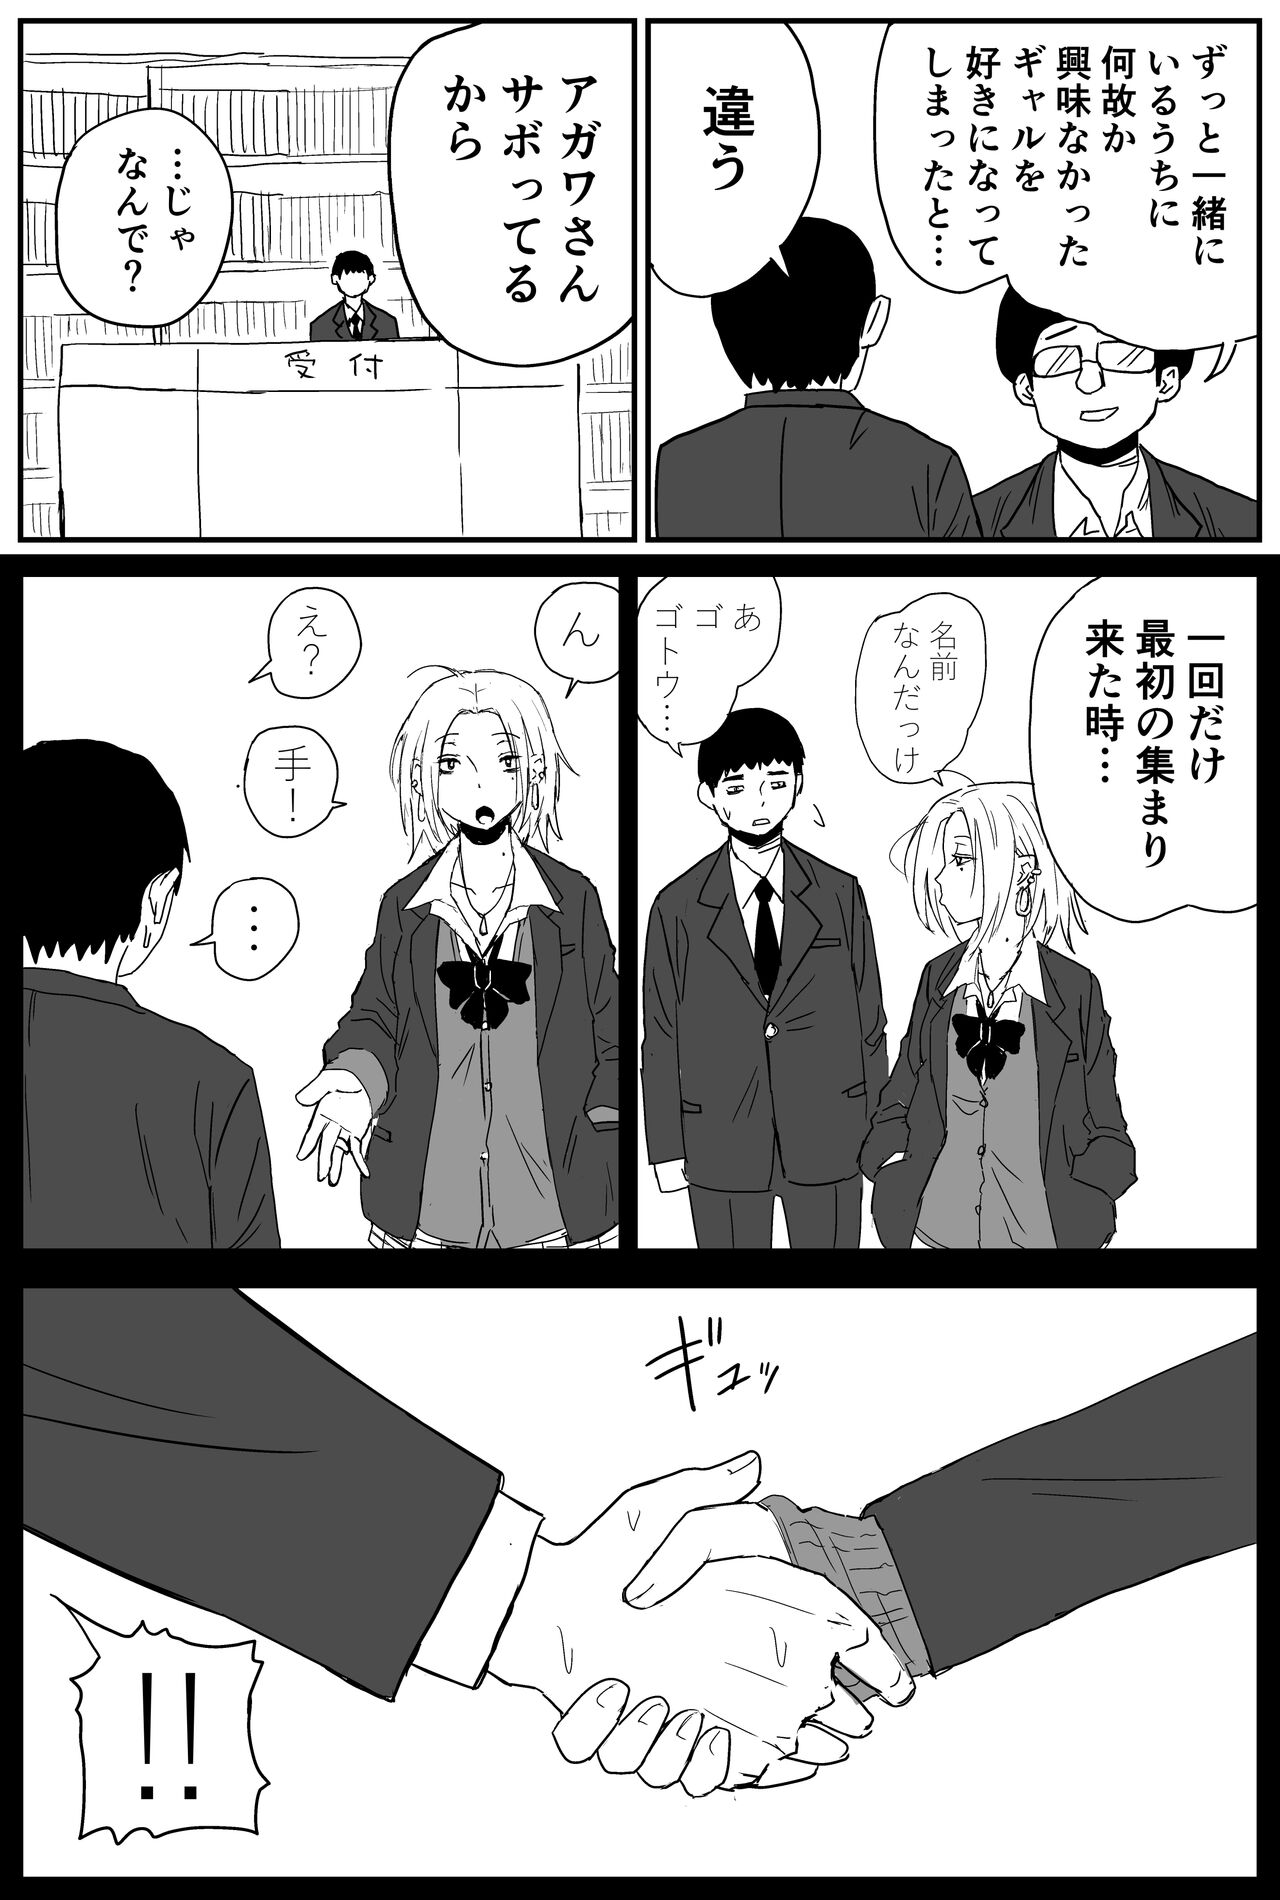 Gal JK Ero Manga Ch.1-27 - Page 5 - HentaiRox